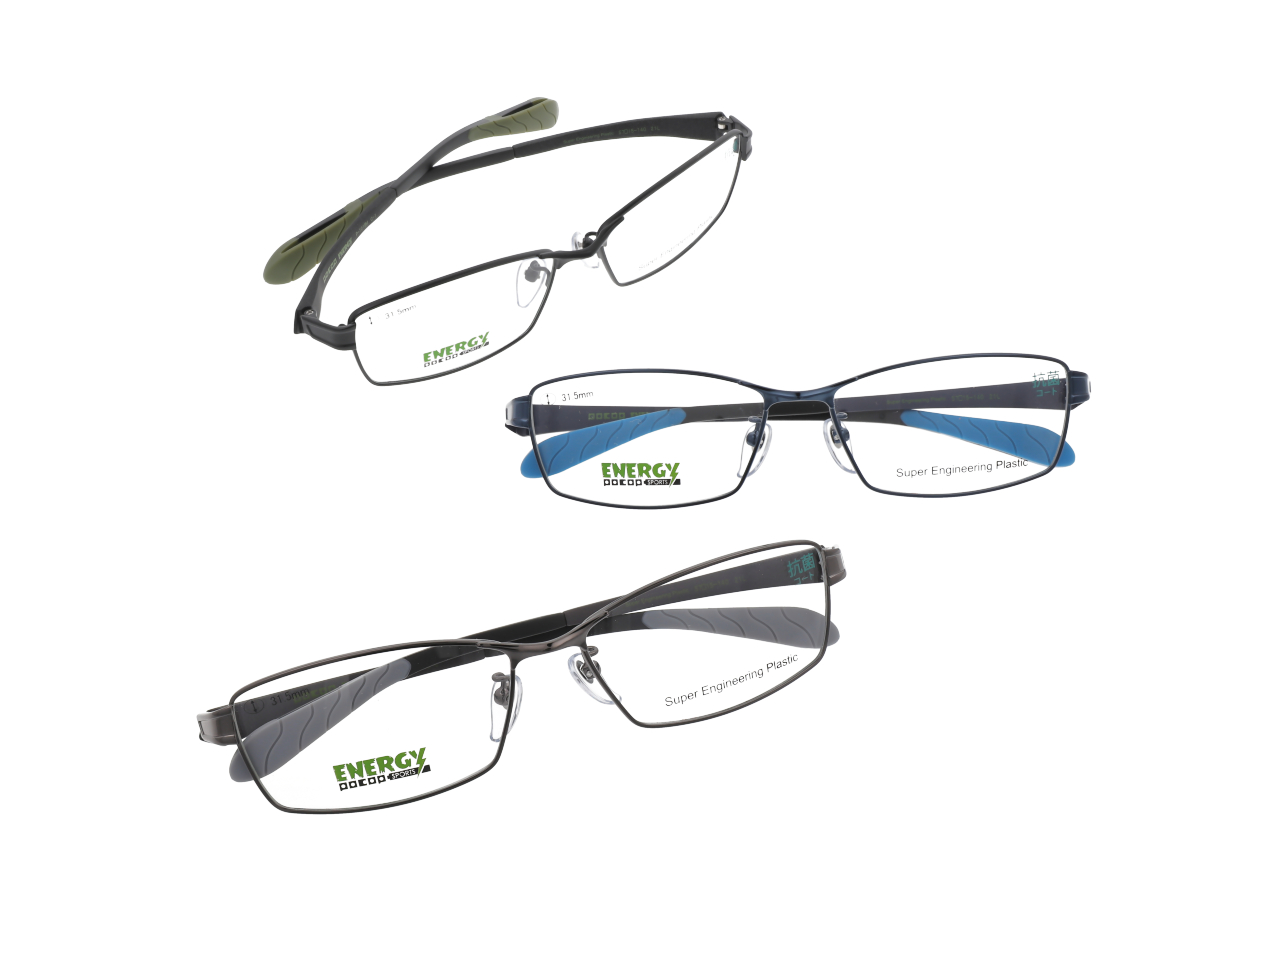 POCOP ENERGY 1018M | メガネの愛眼 - めがね・サングラス・コンタクトレンズ・補聴器等をご提供する眼鏡専門店